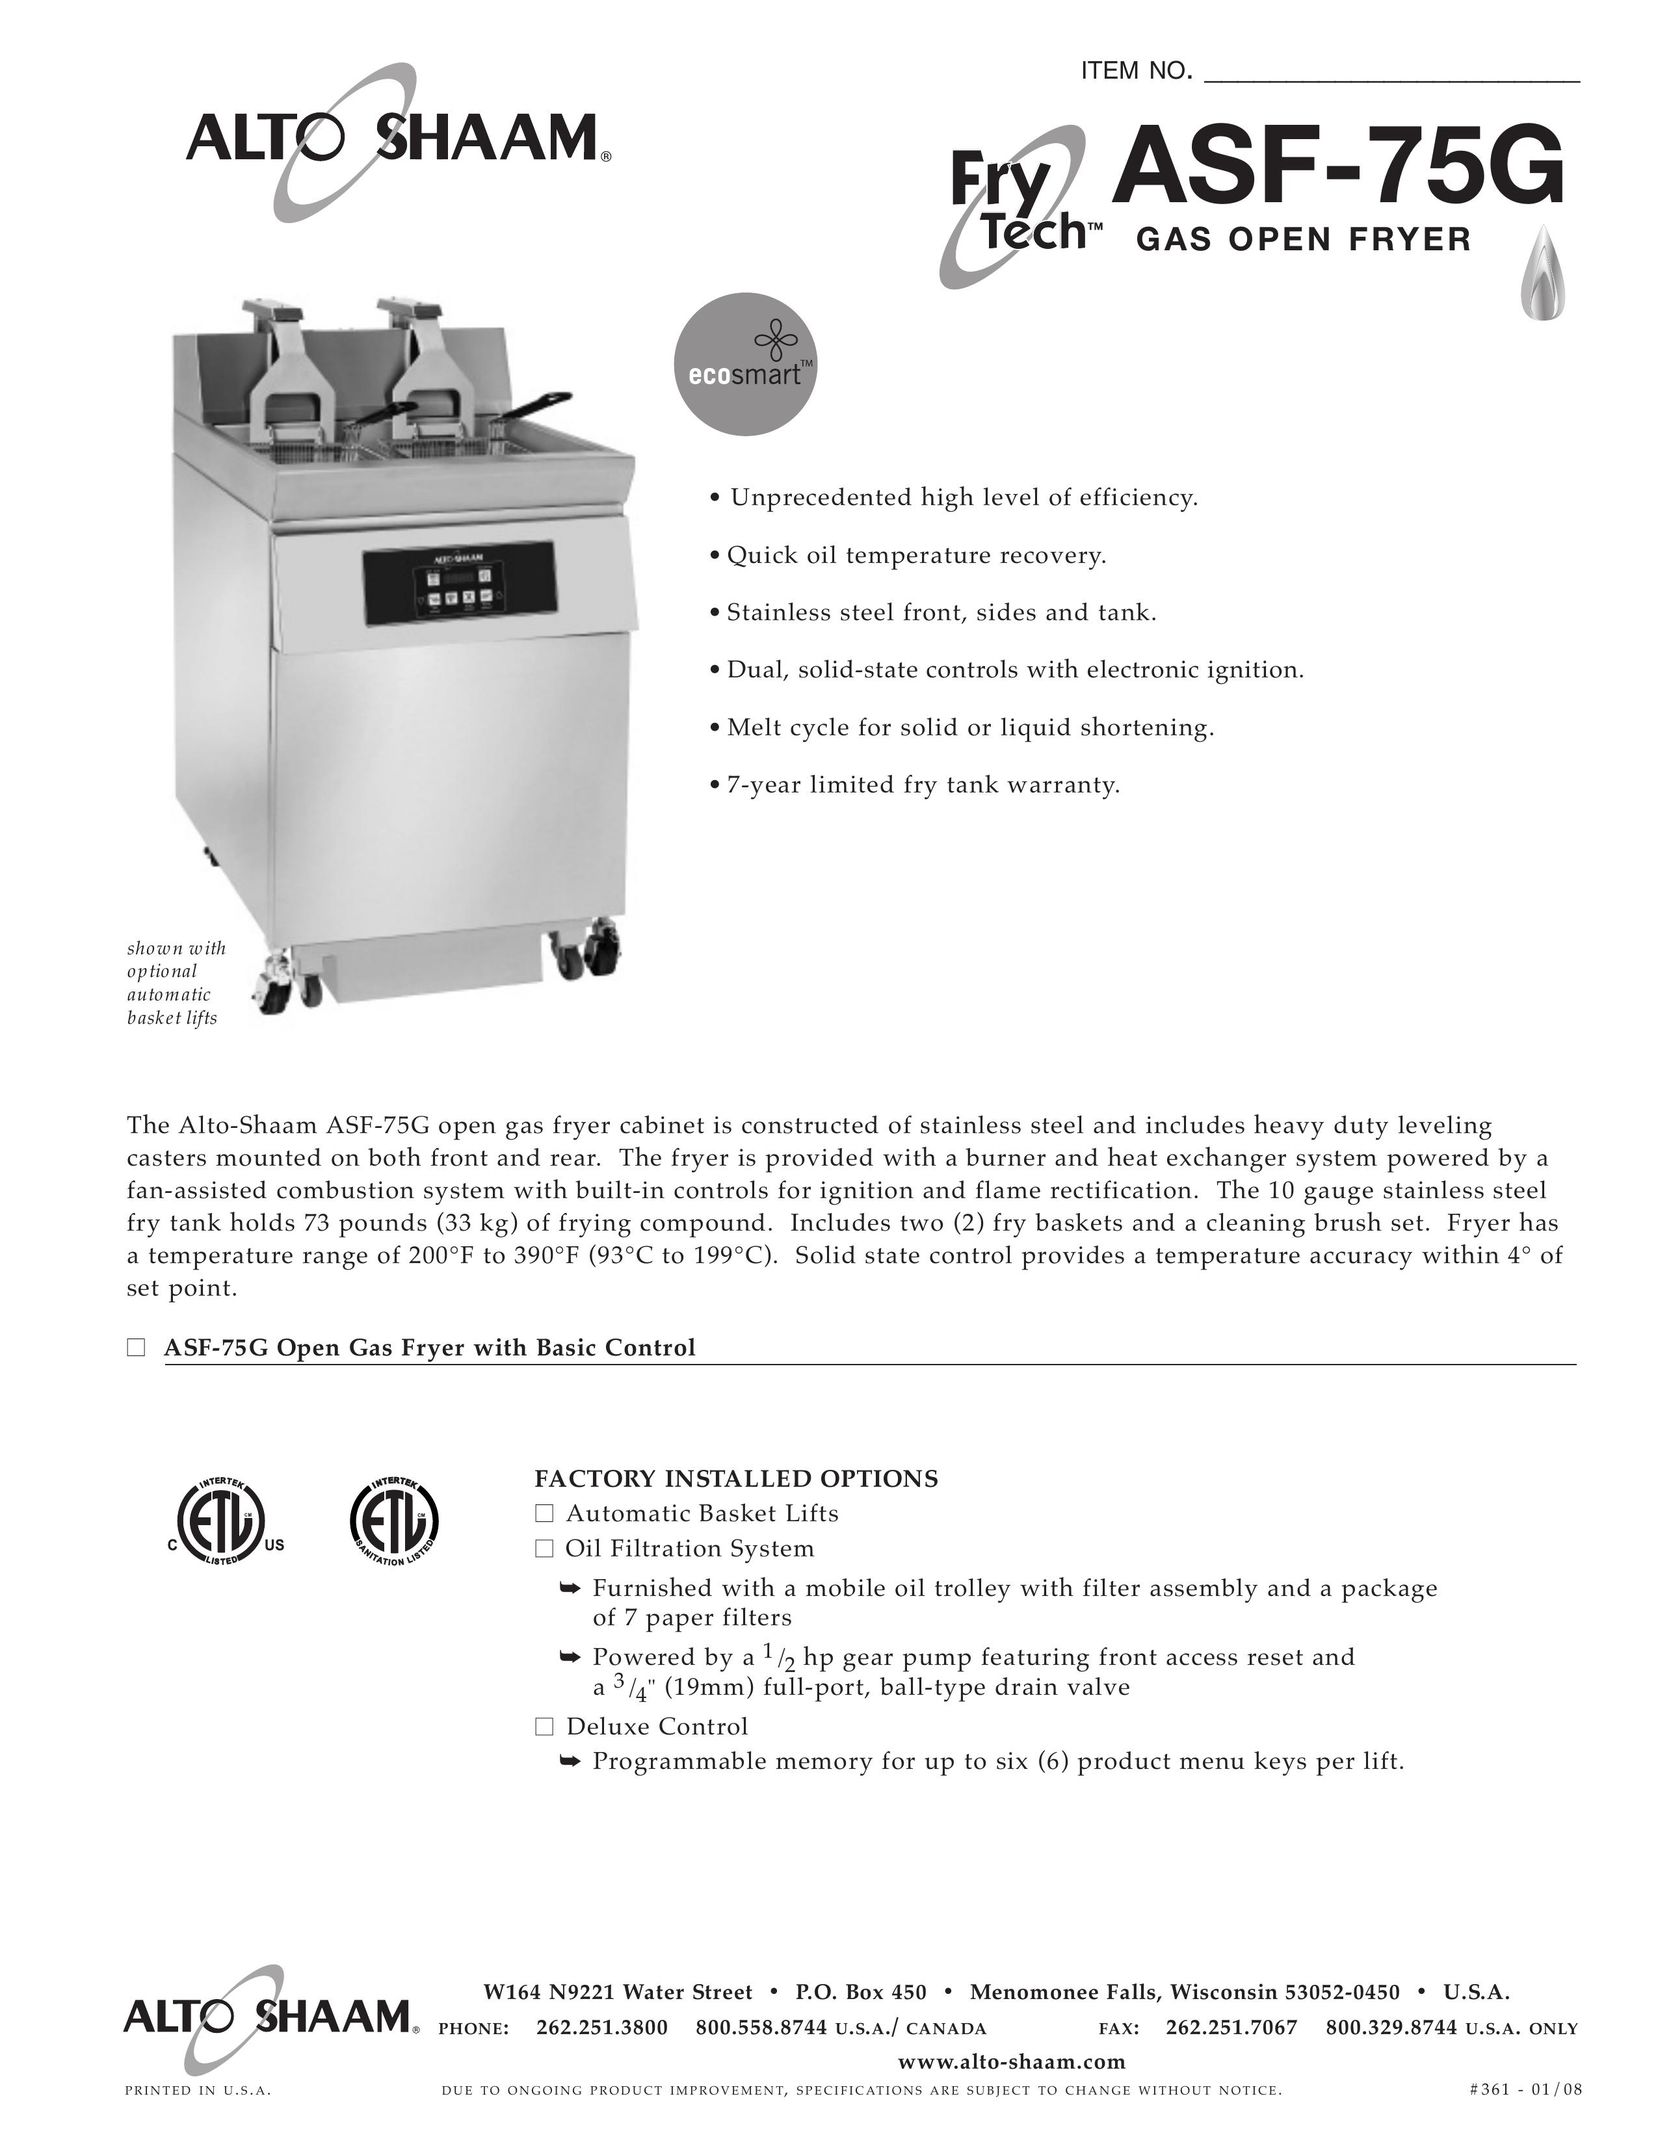 Alto-Shaam ASF-75G Fryer User Manual